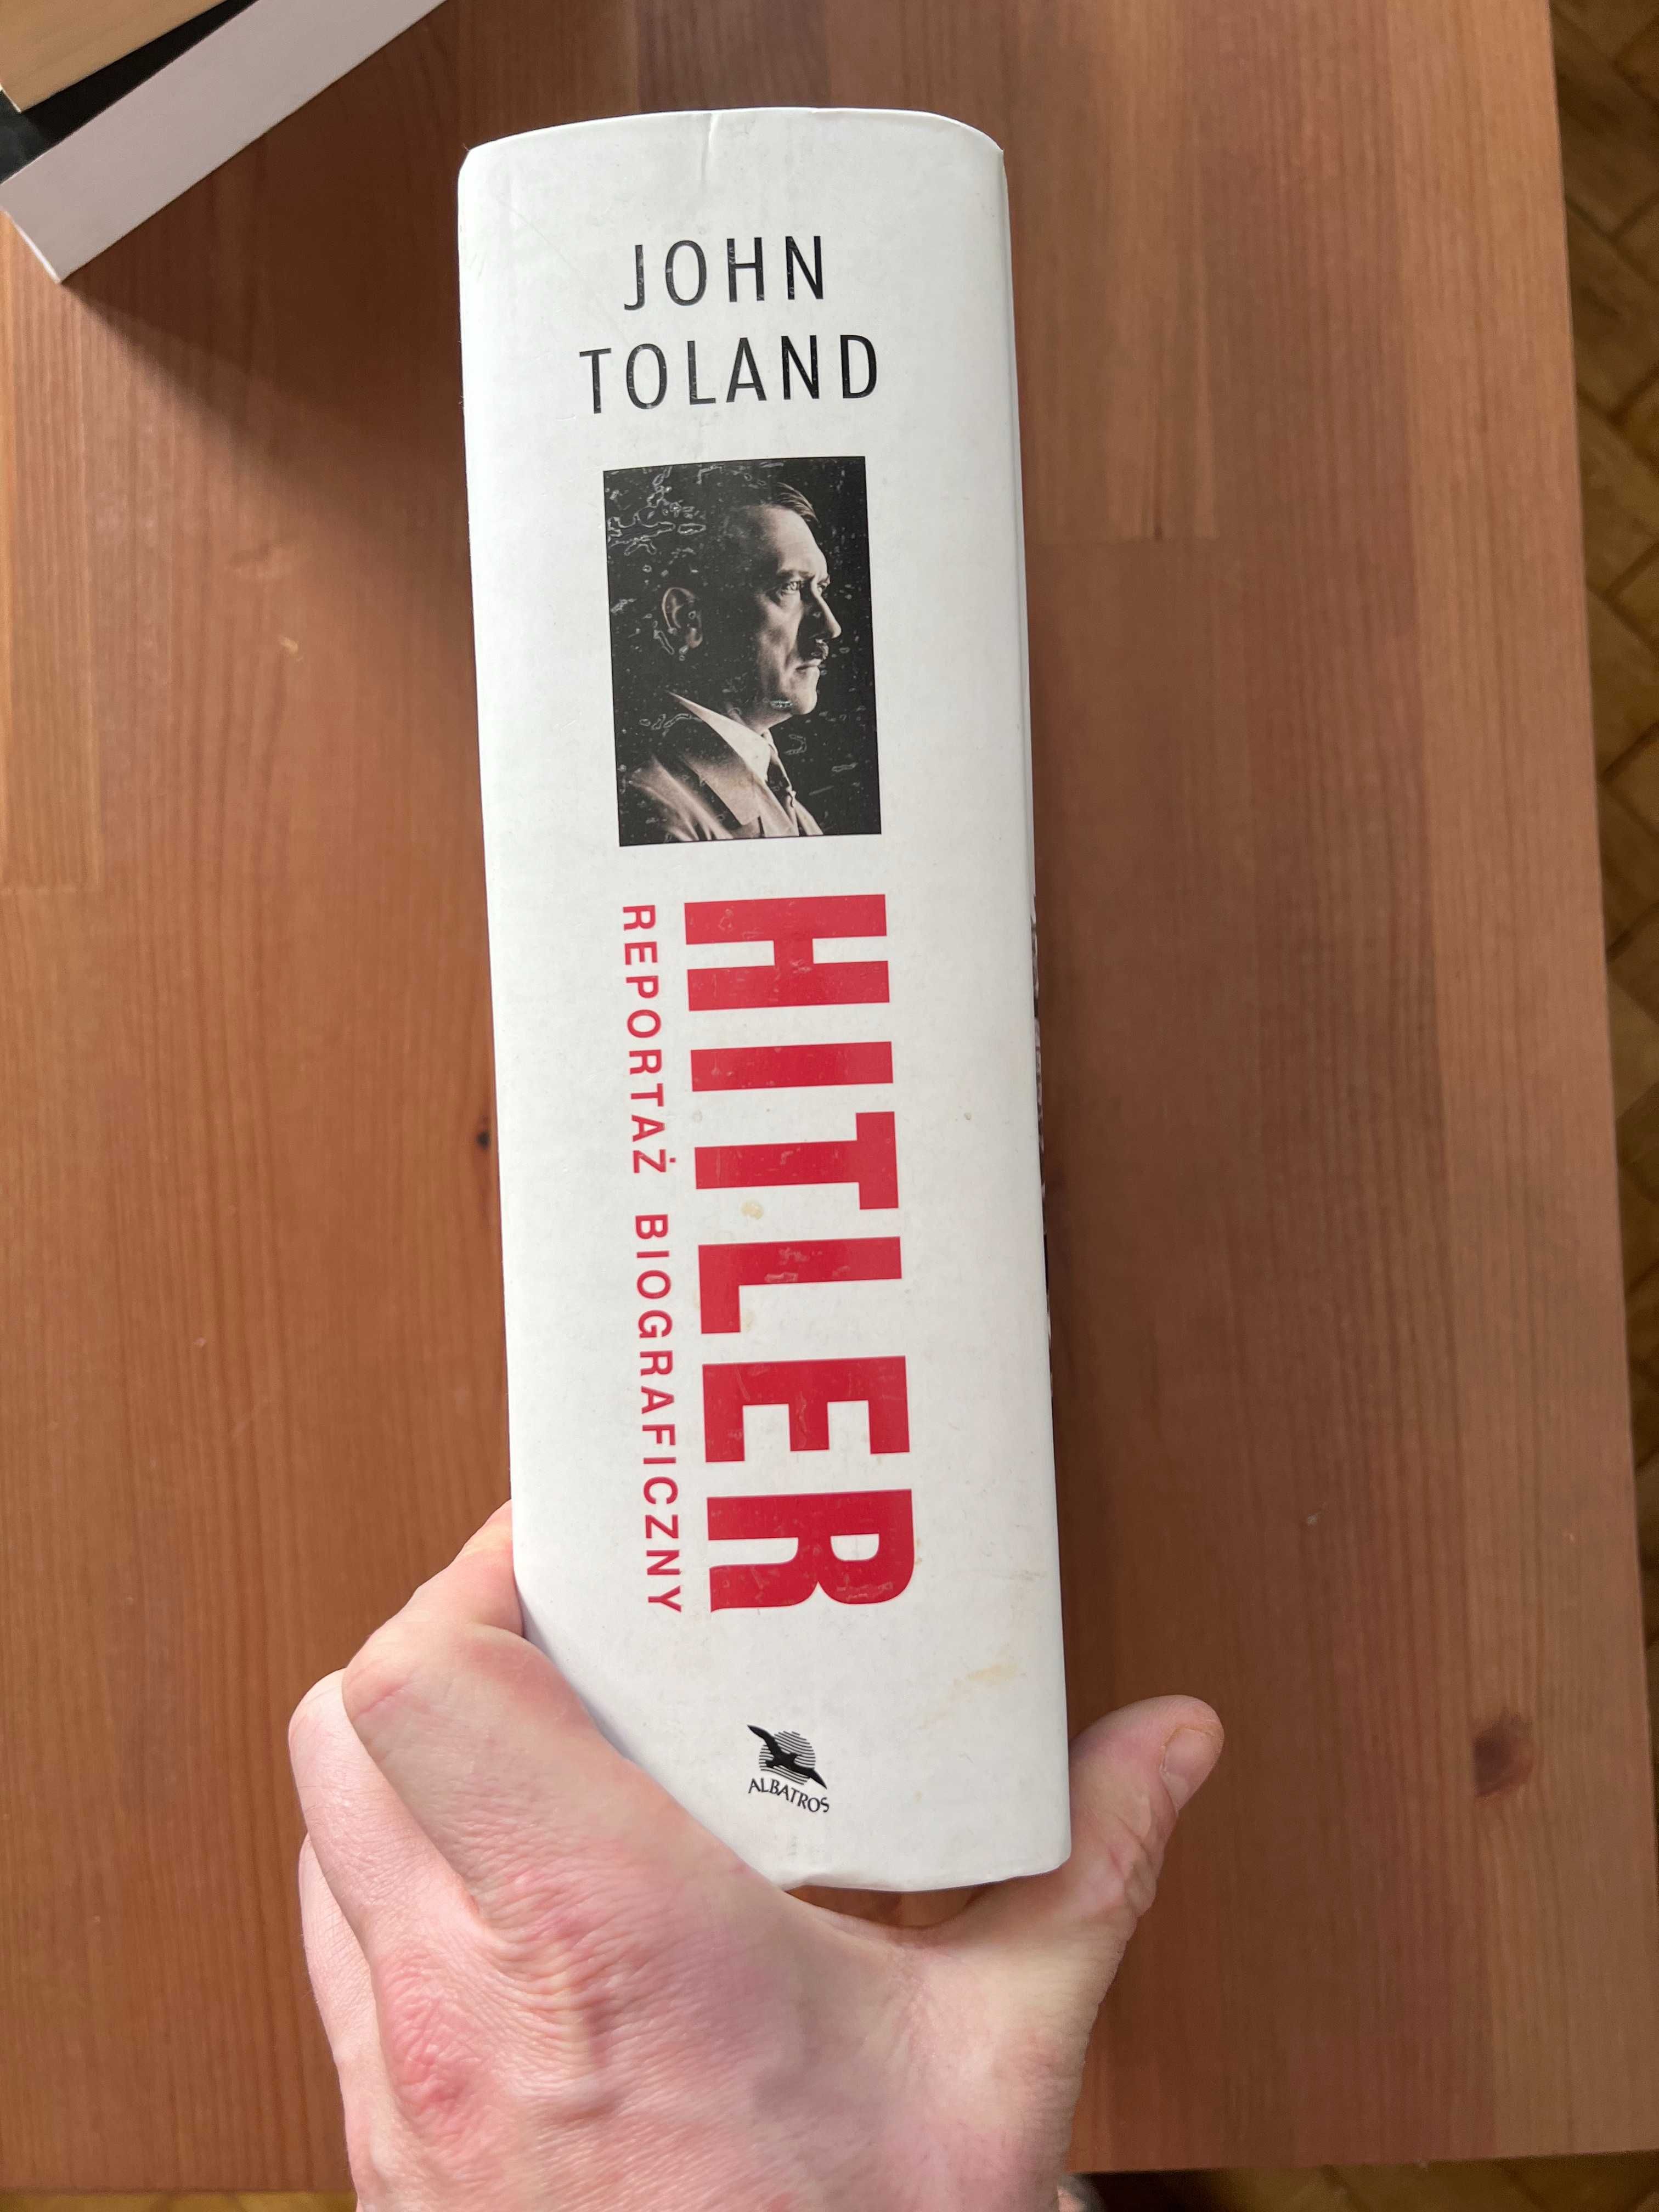 Hitler - Reportaż Biograficzny - John Toland - twarda